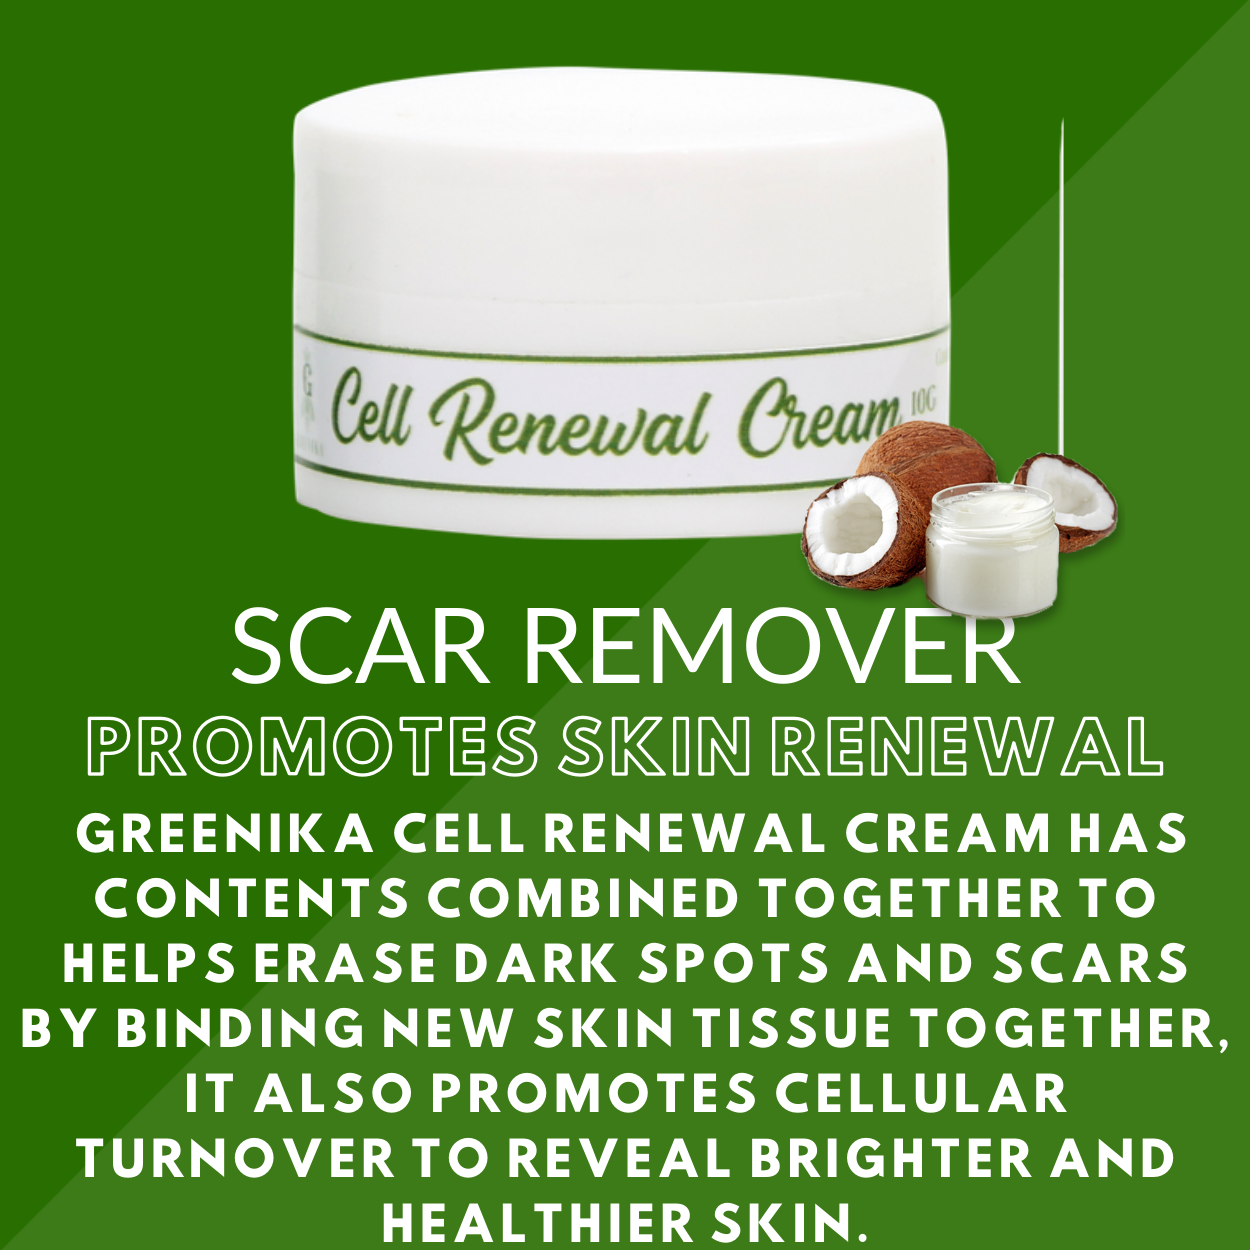 Greenika Cell Renewal Cream